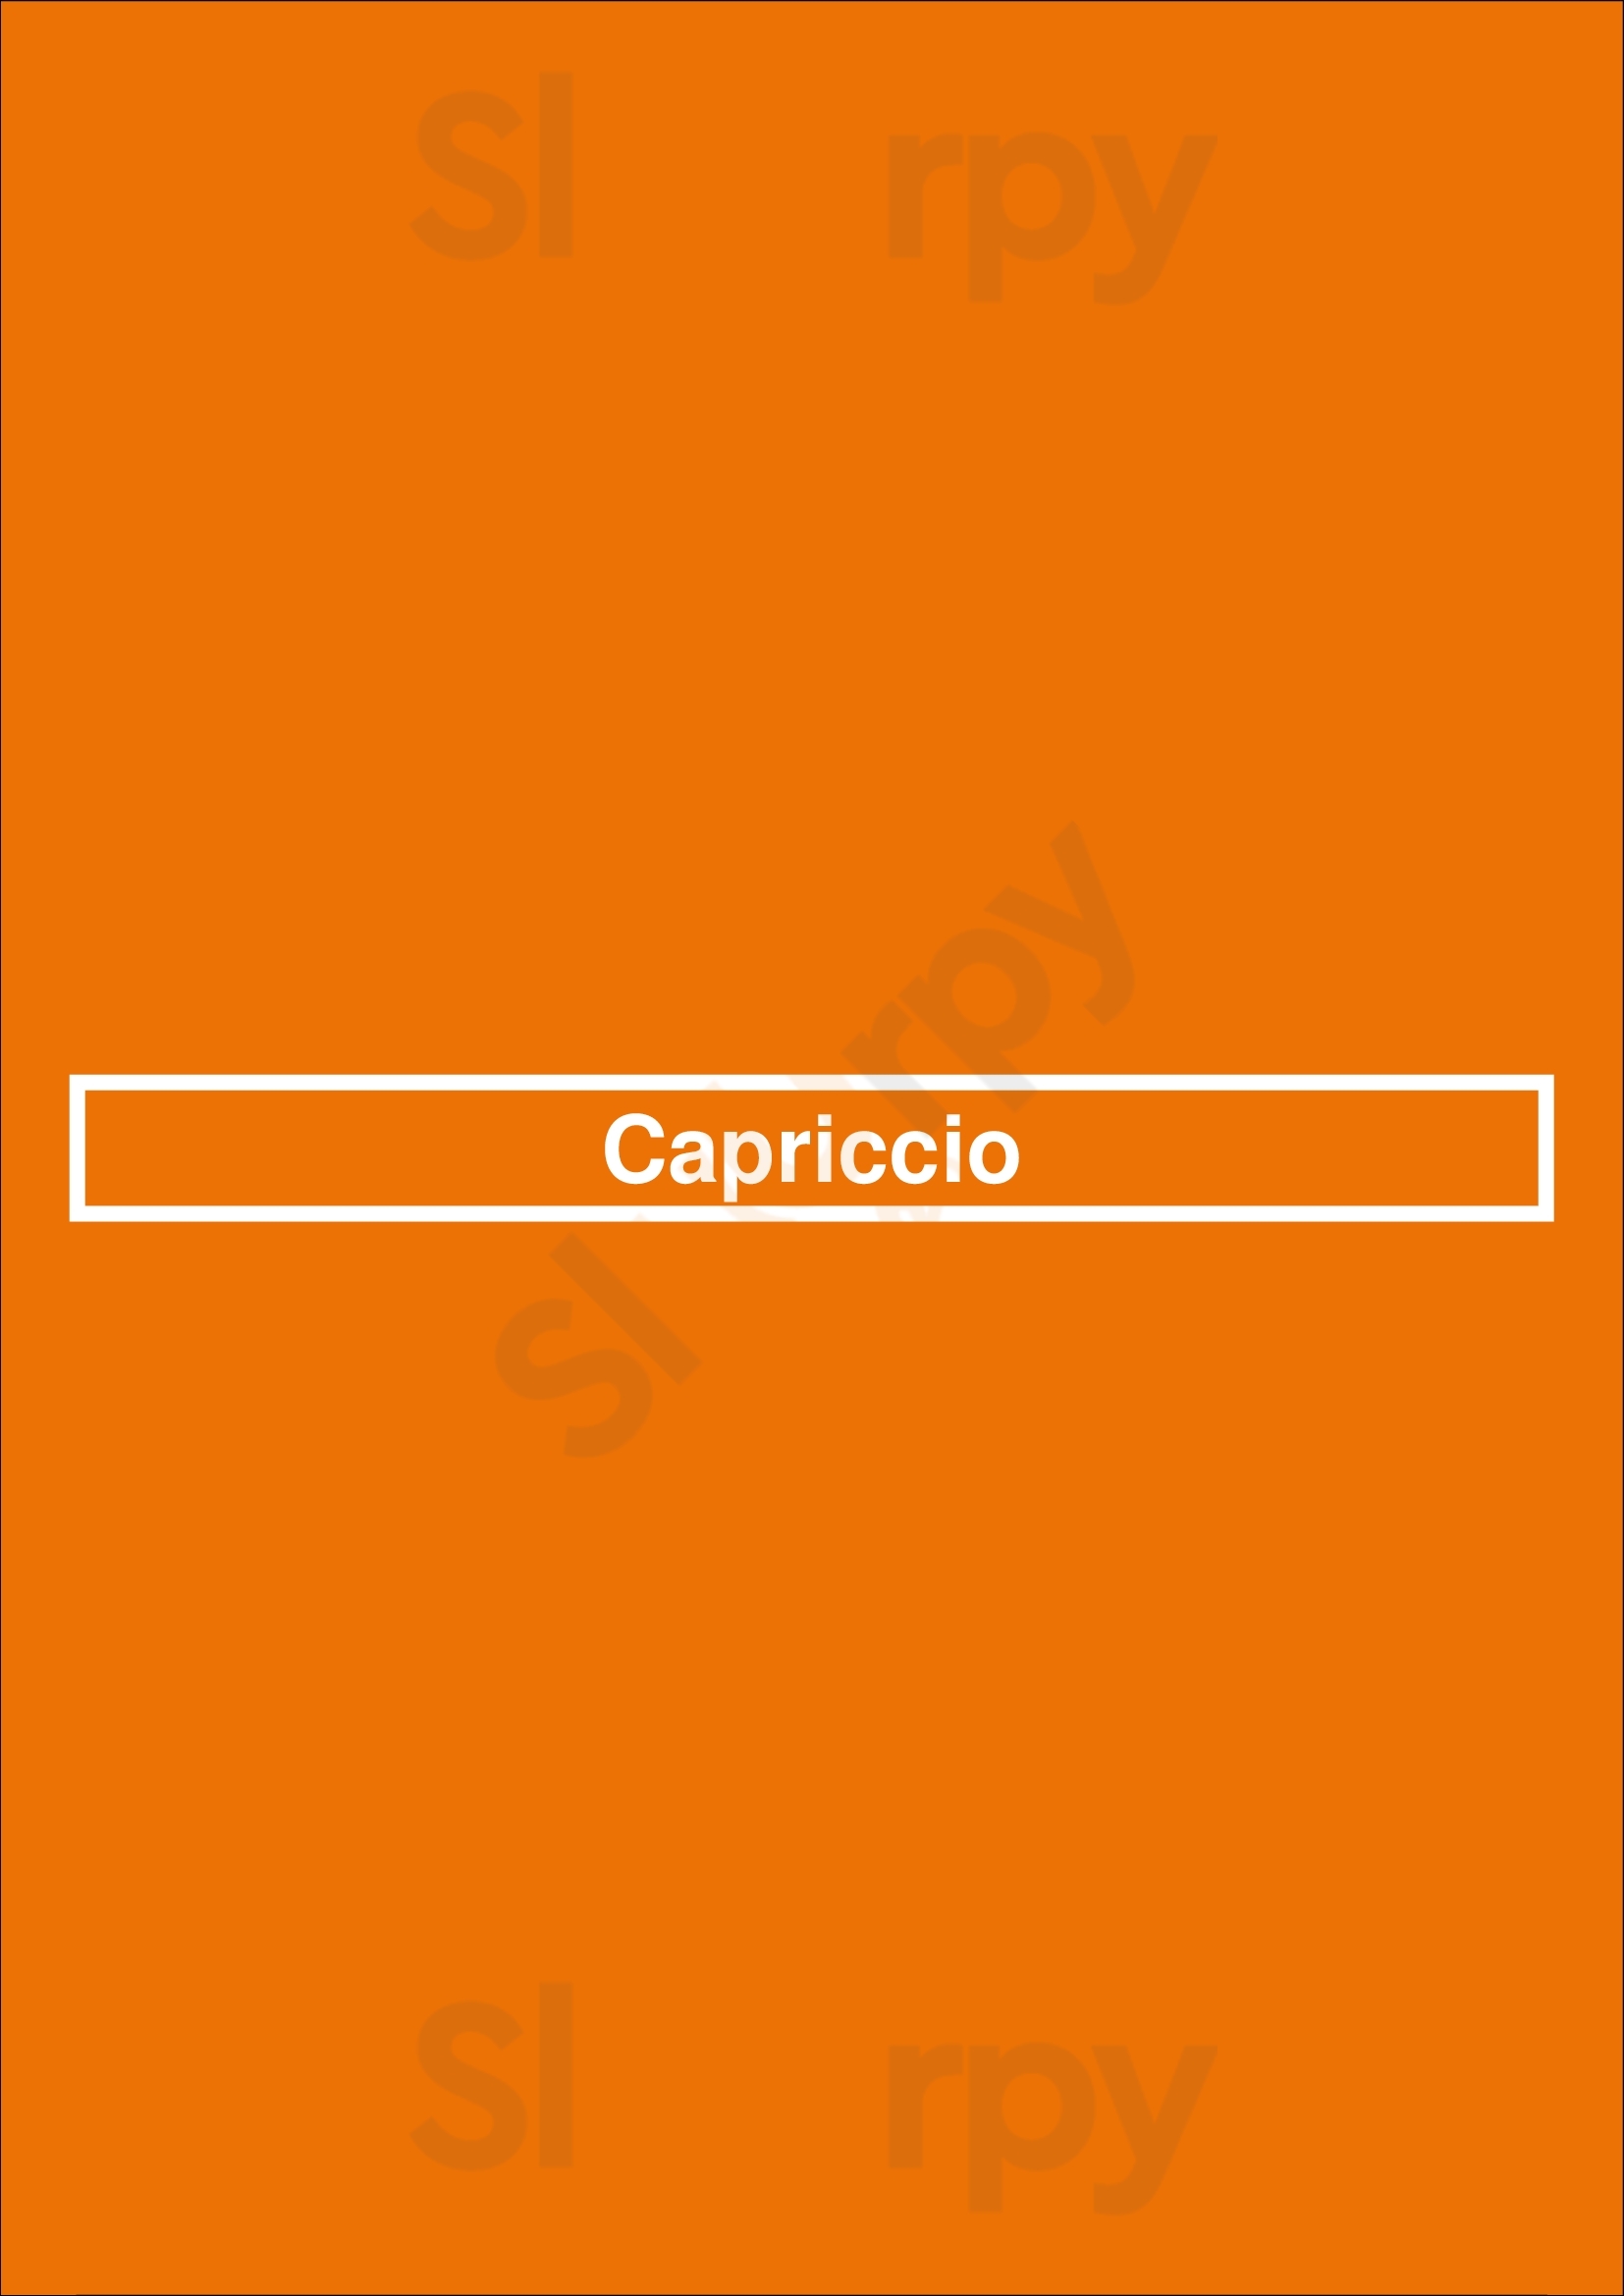 Capriccio Providence Menu - 1